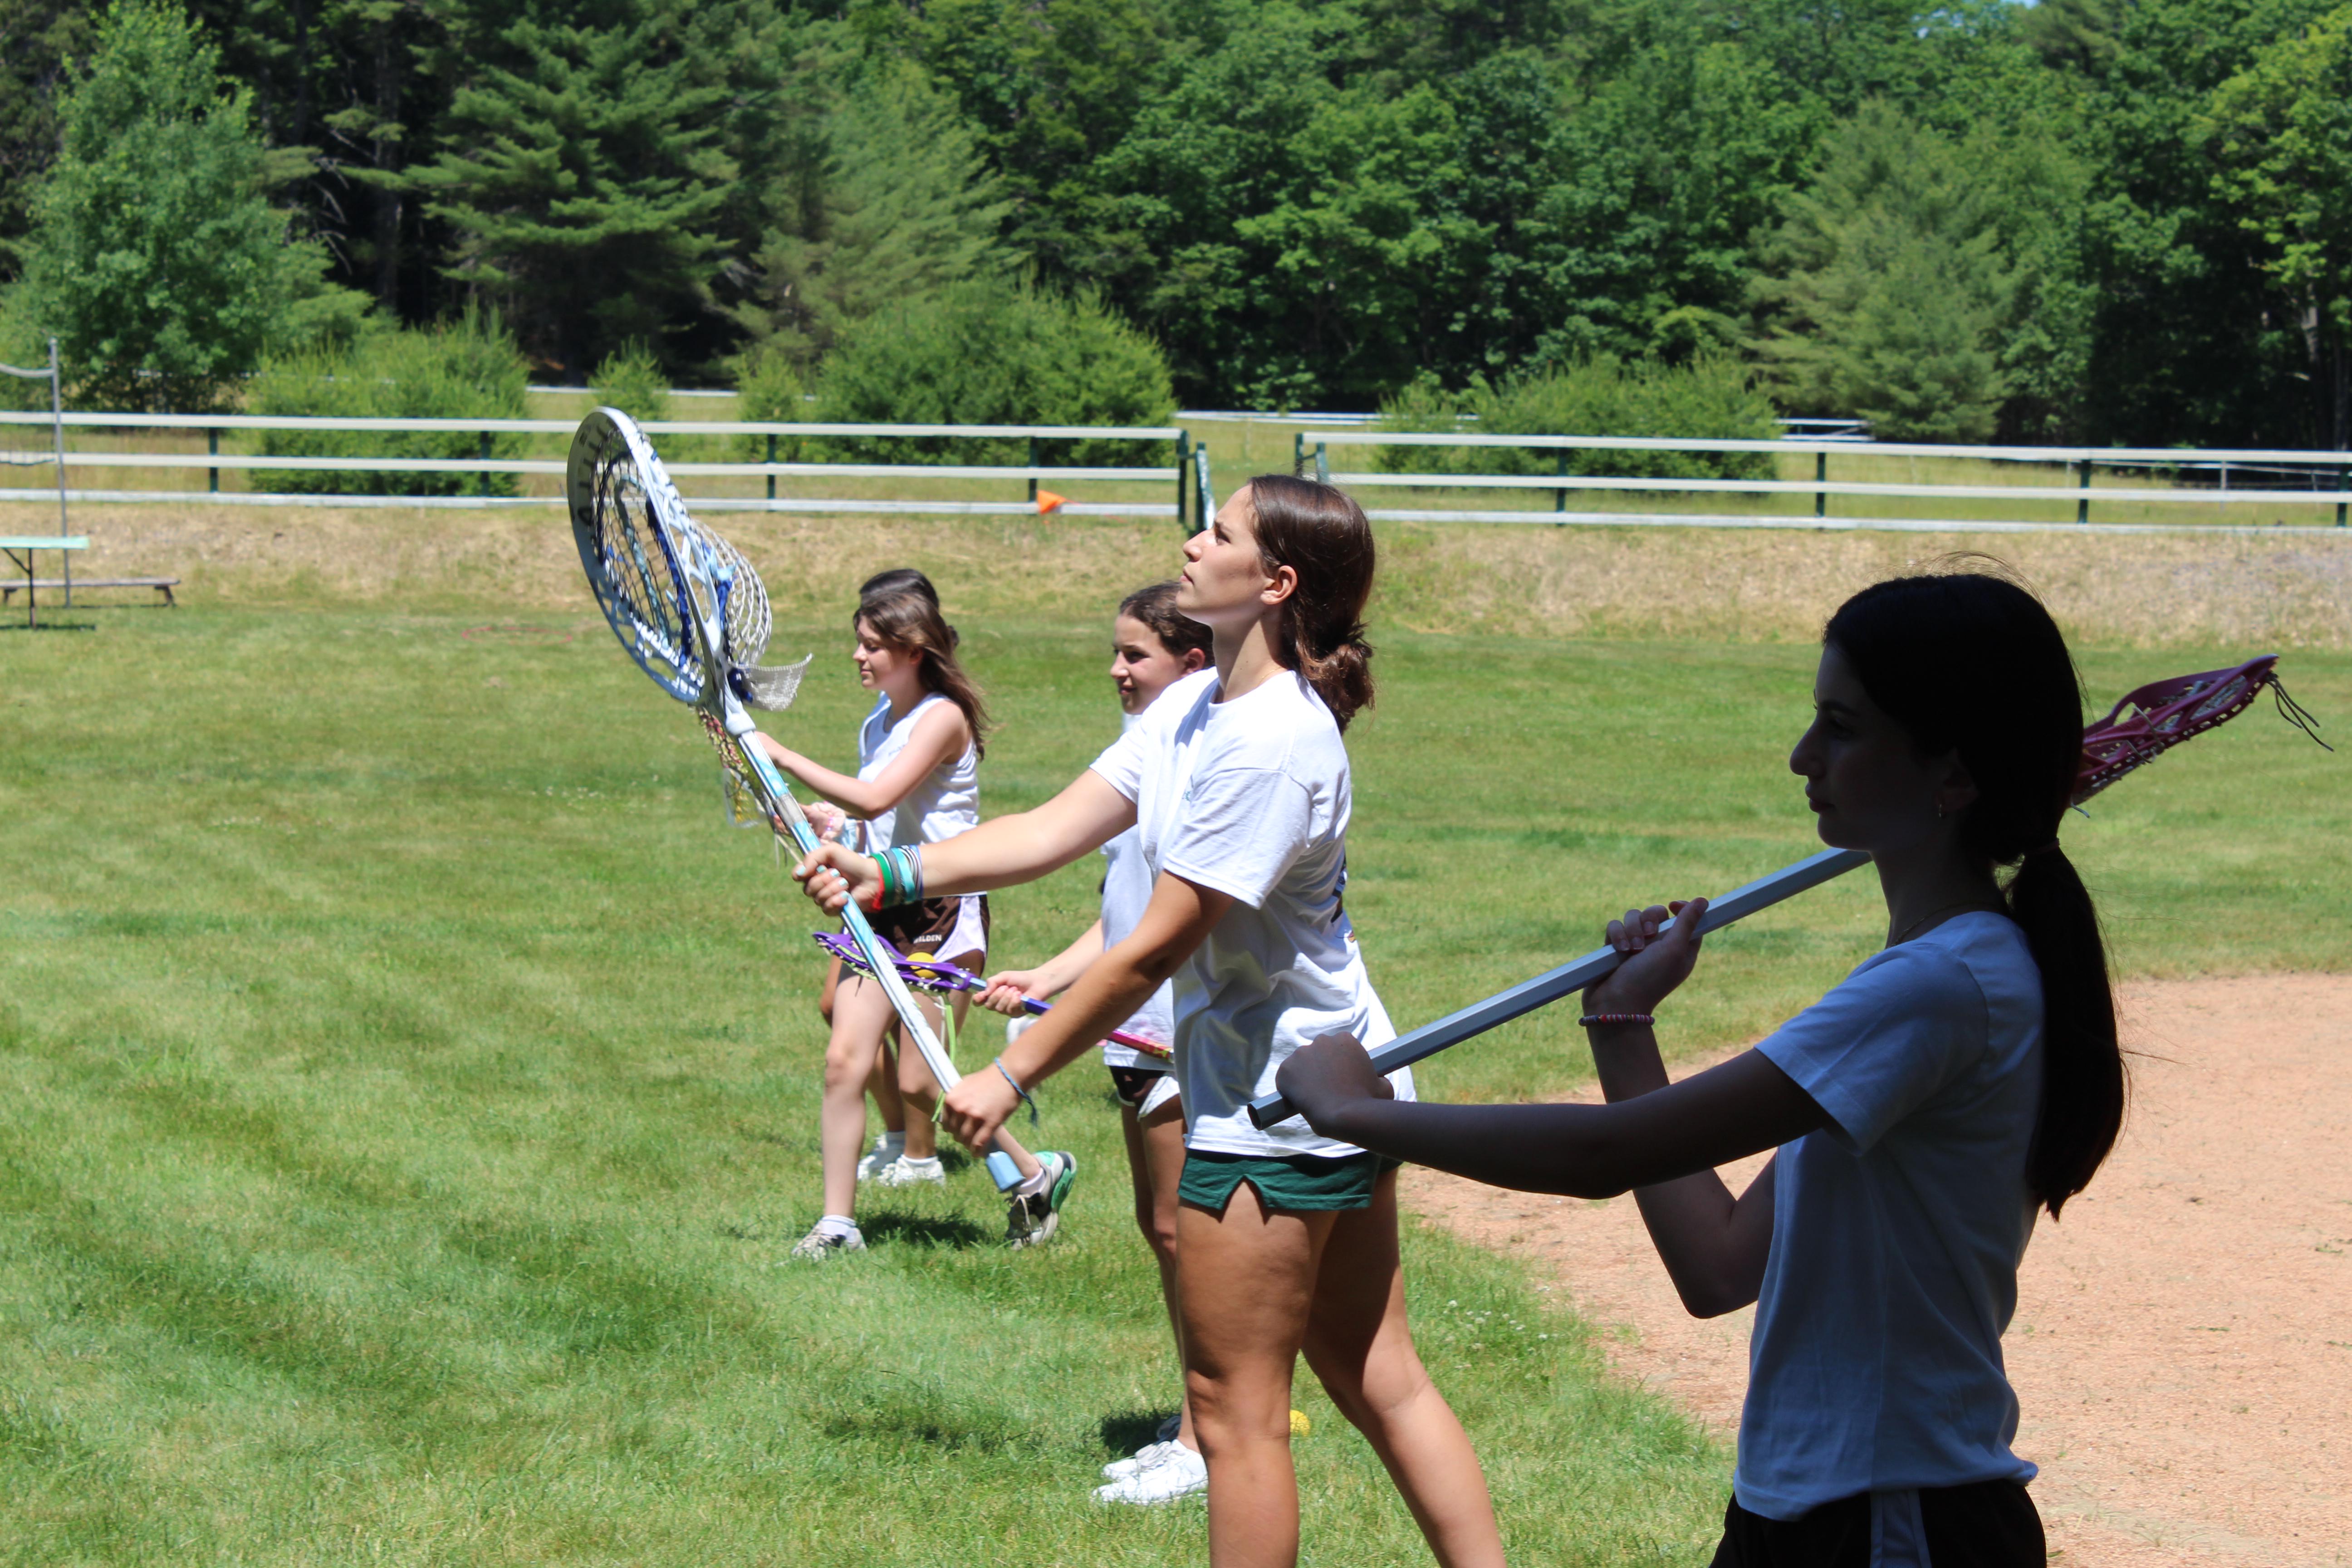 Girls practicing lacrosse drills